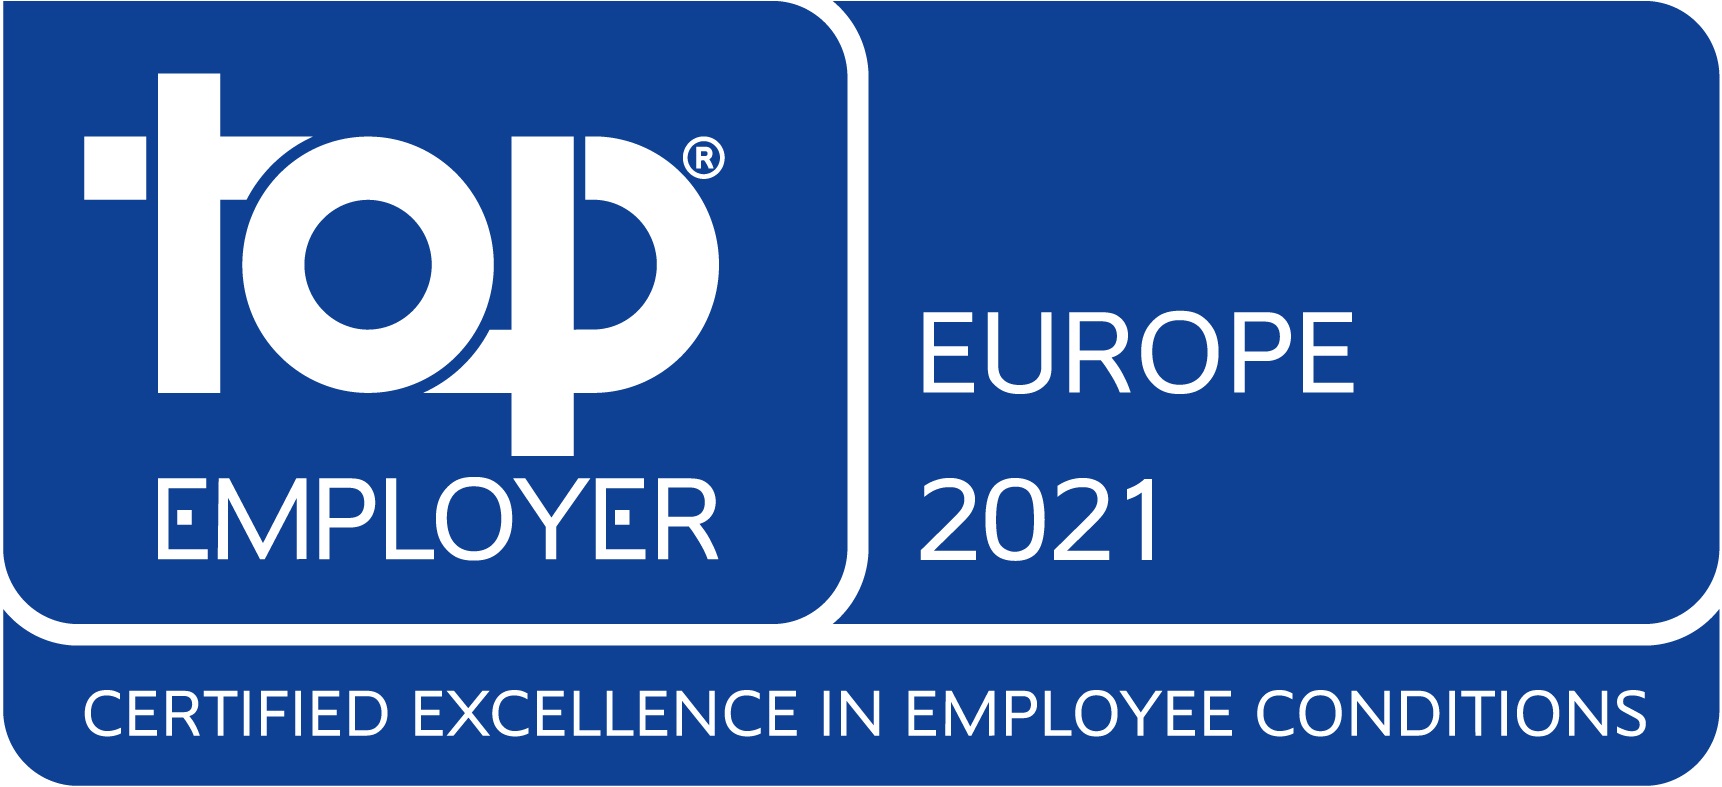 Top_Employer_Europe_2021_logo.jpg